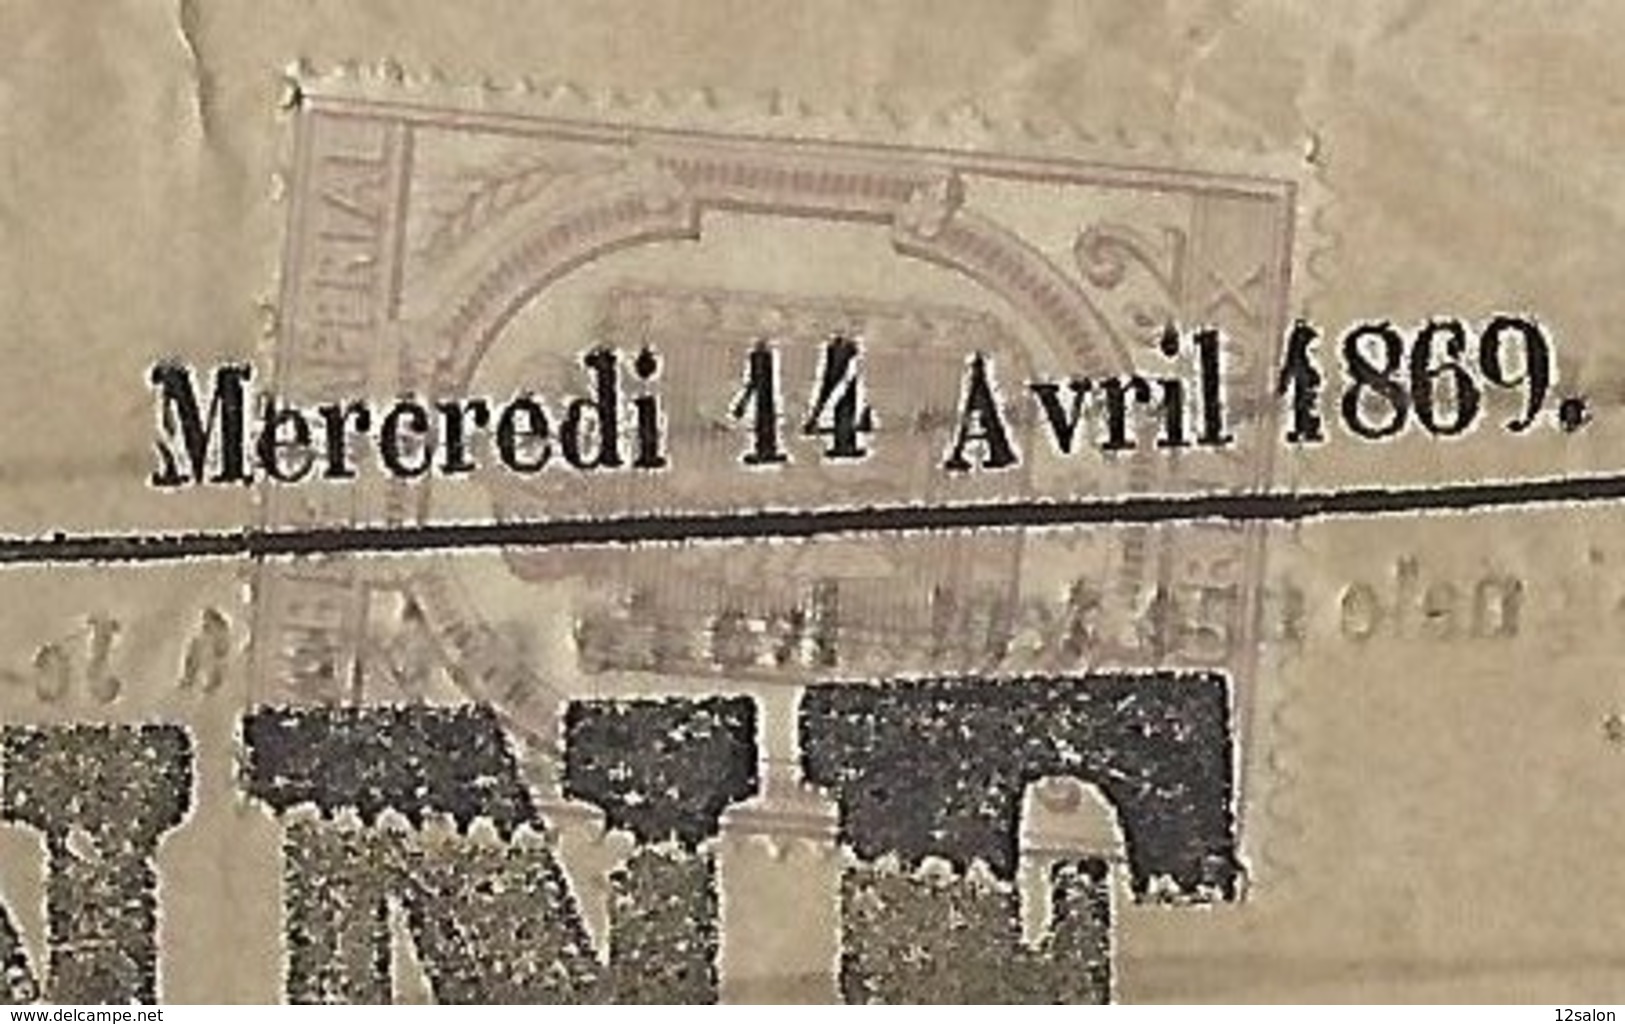 JOURNAL COMPLET COURRIER DE L'YONNE 14 Avril 1869 Avec TIMBRE - Newspapers